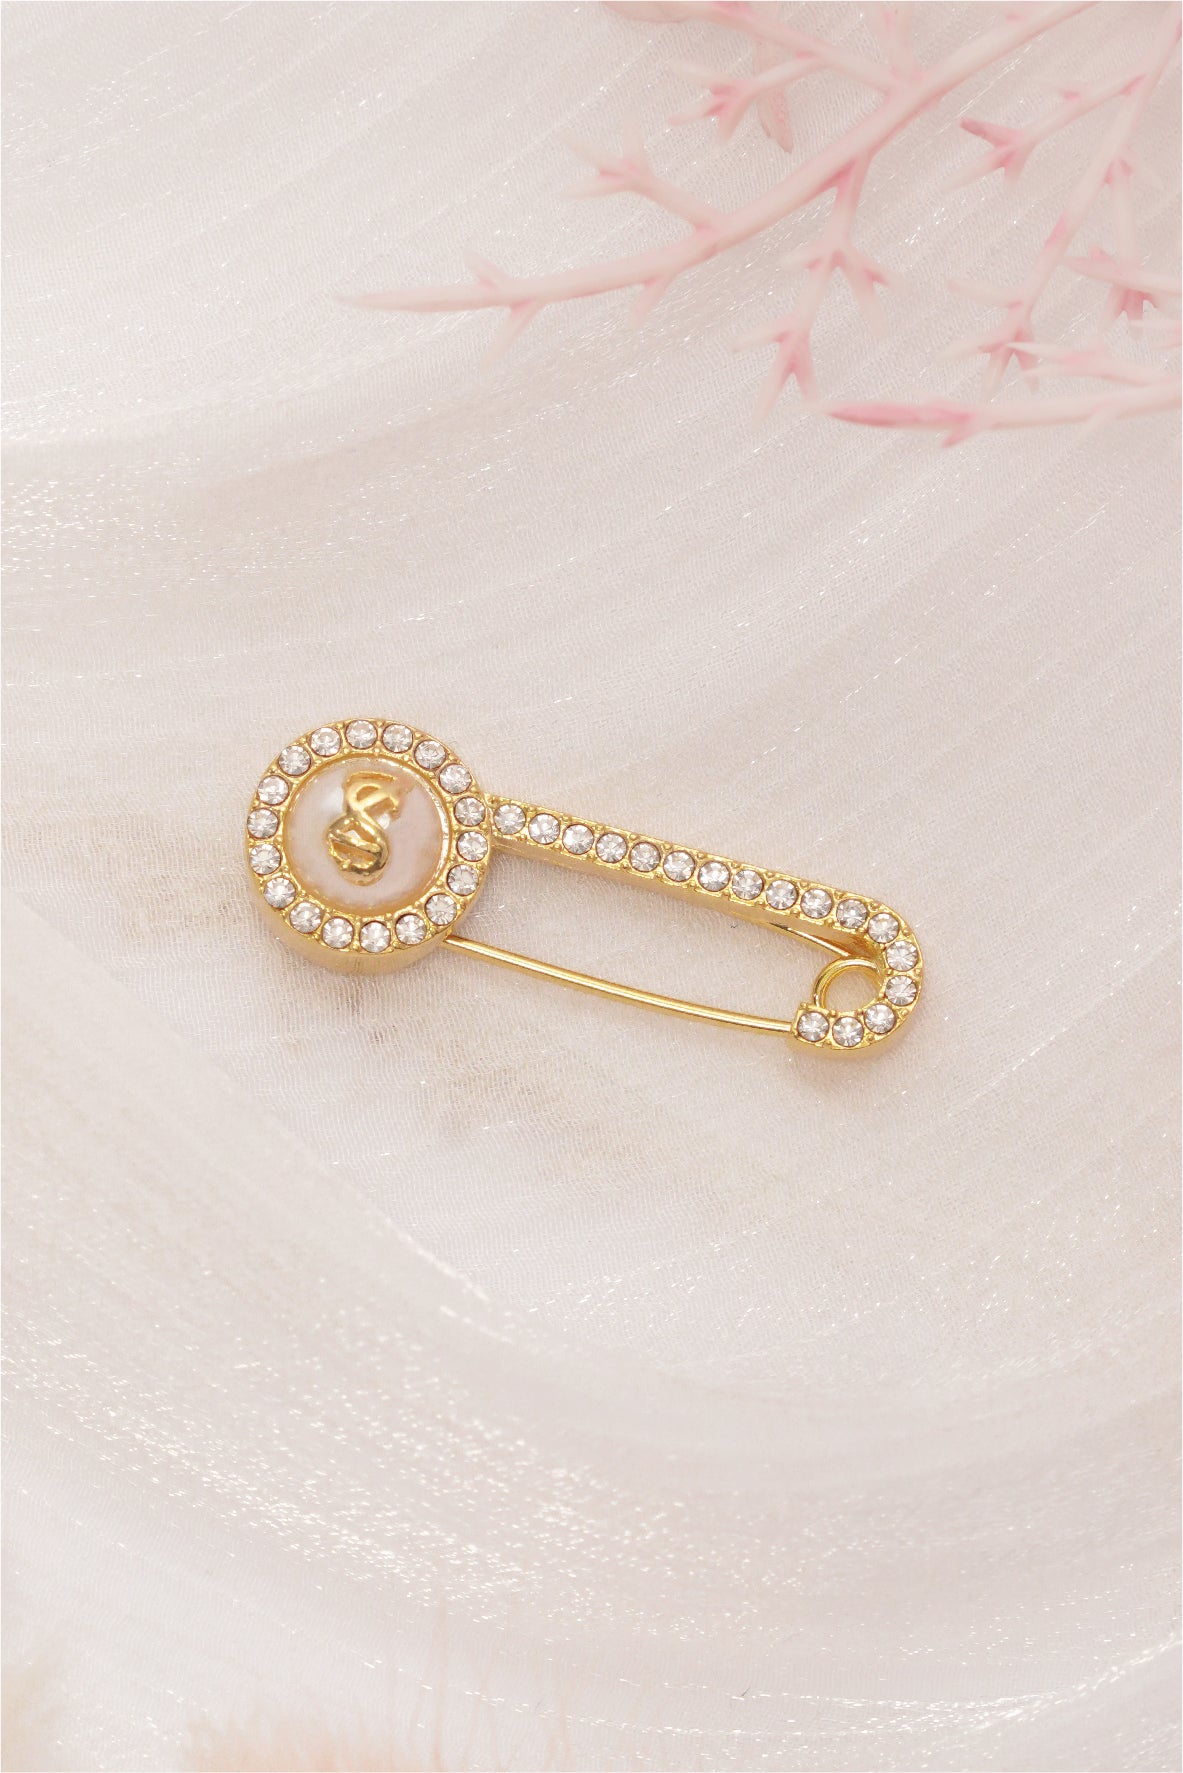 Safety Hijab Pin Set - Gold